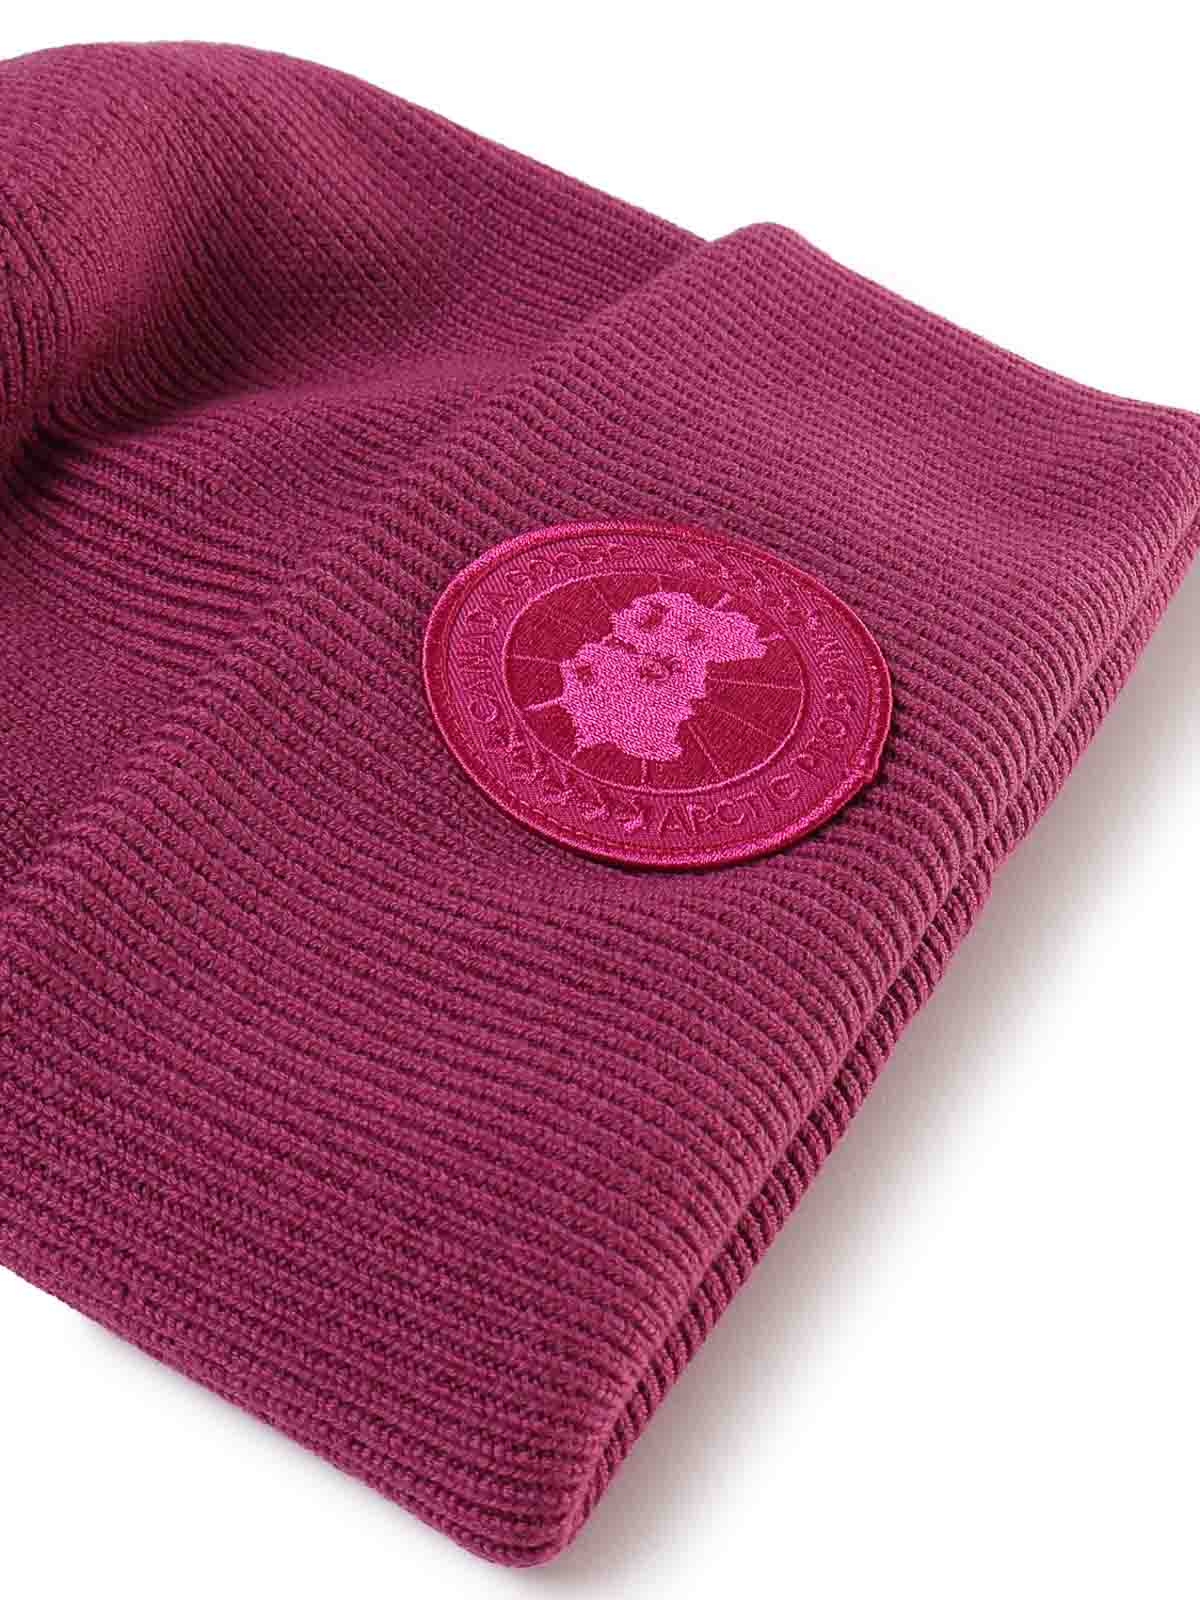 Shop Canada Goose Arctic Toque Garment Dye Hat In Fuchsia